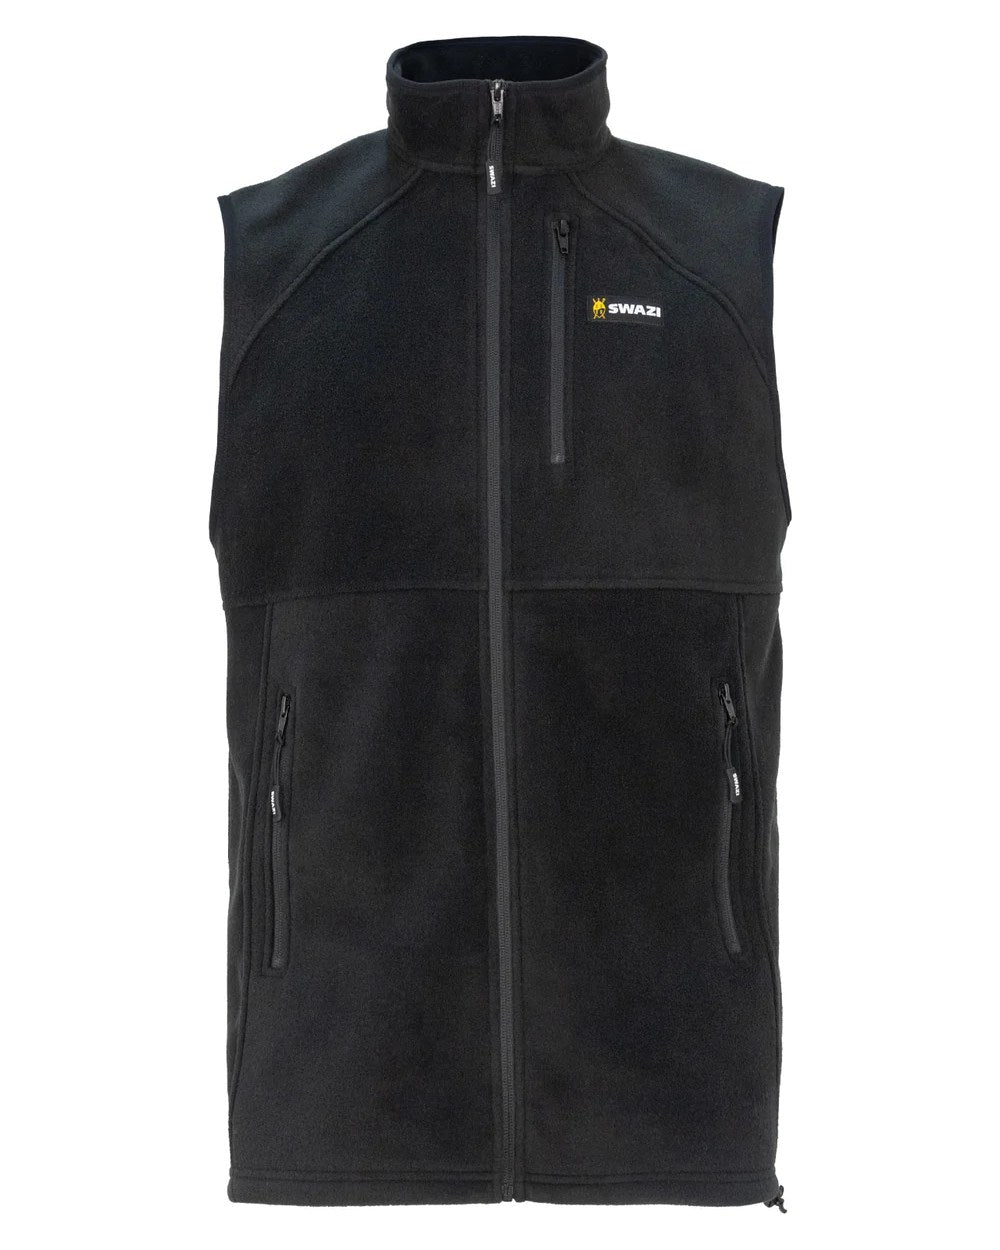 Black Coloured Swazi Sherpa Vest On A White Background 